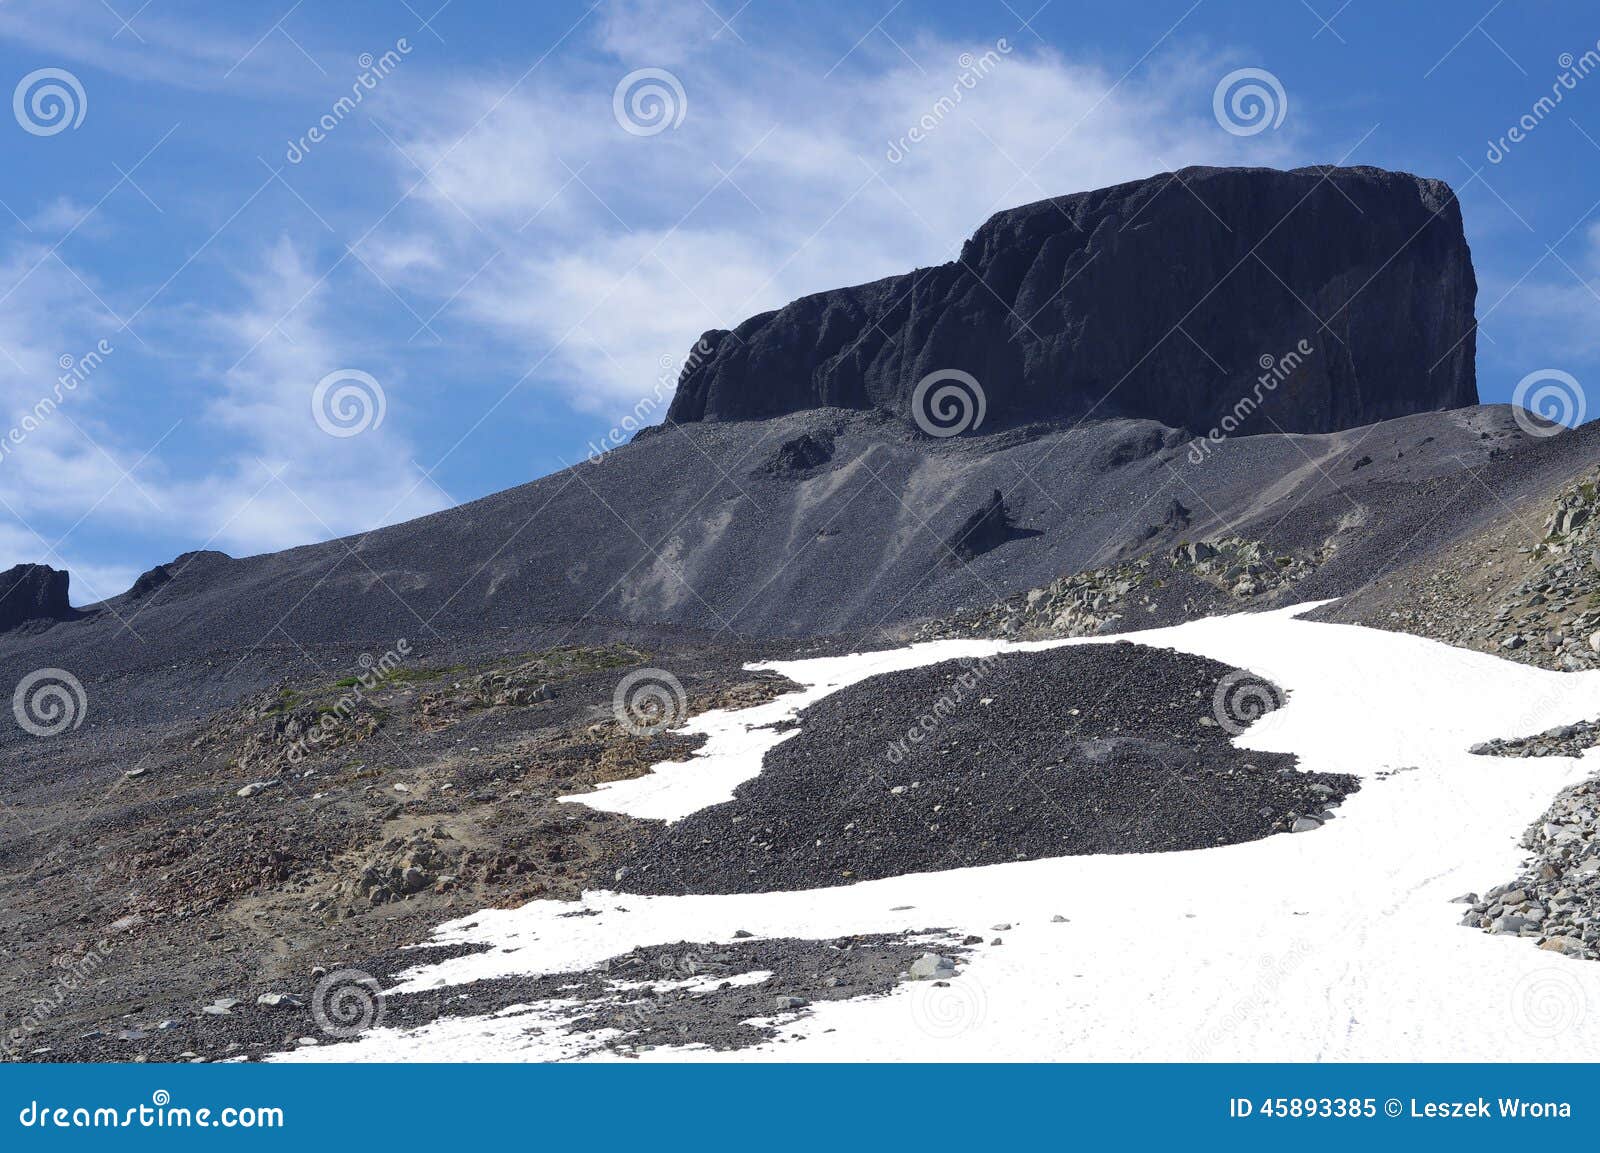 the black tusk volcanic mountain